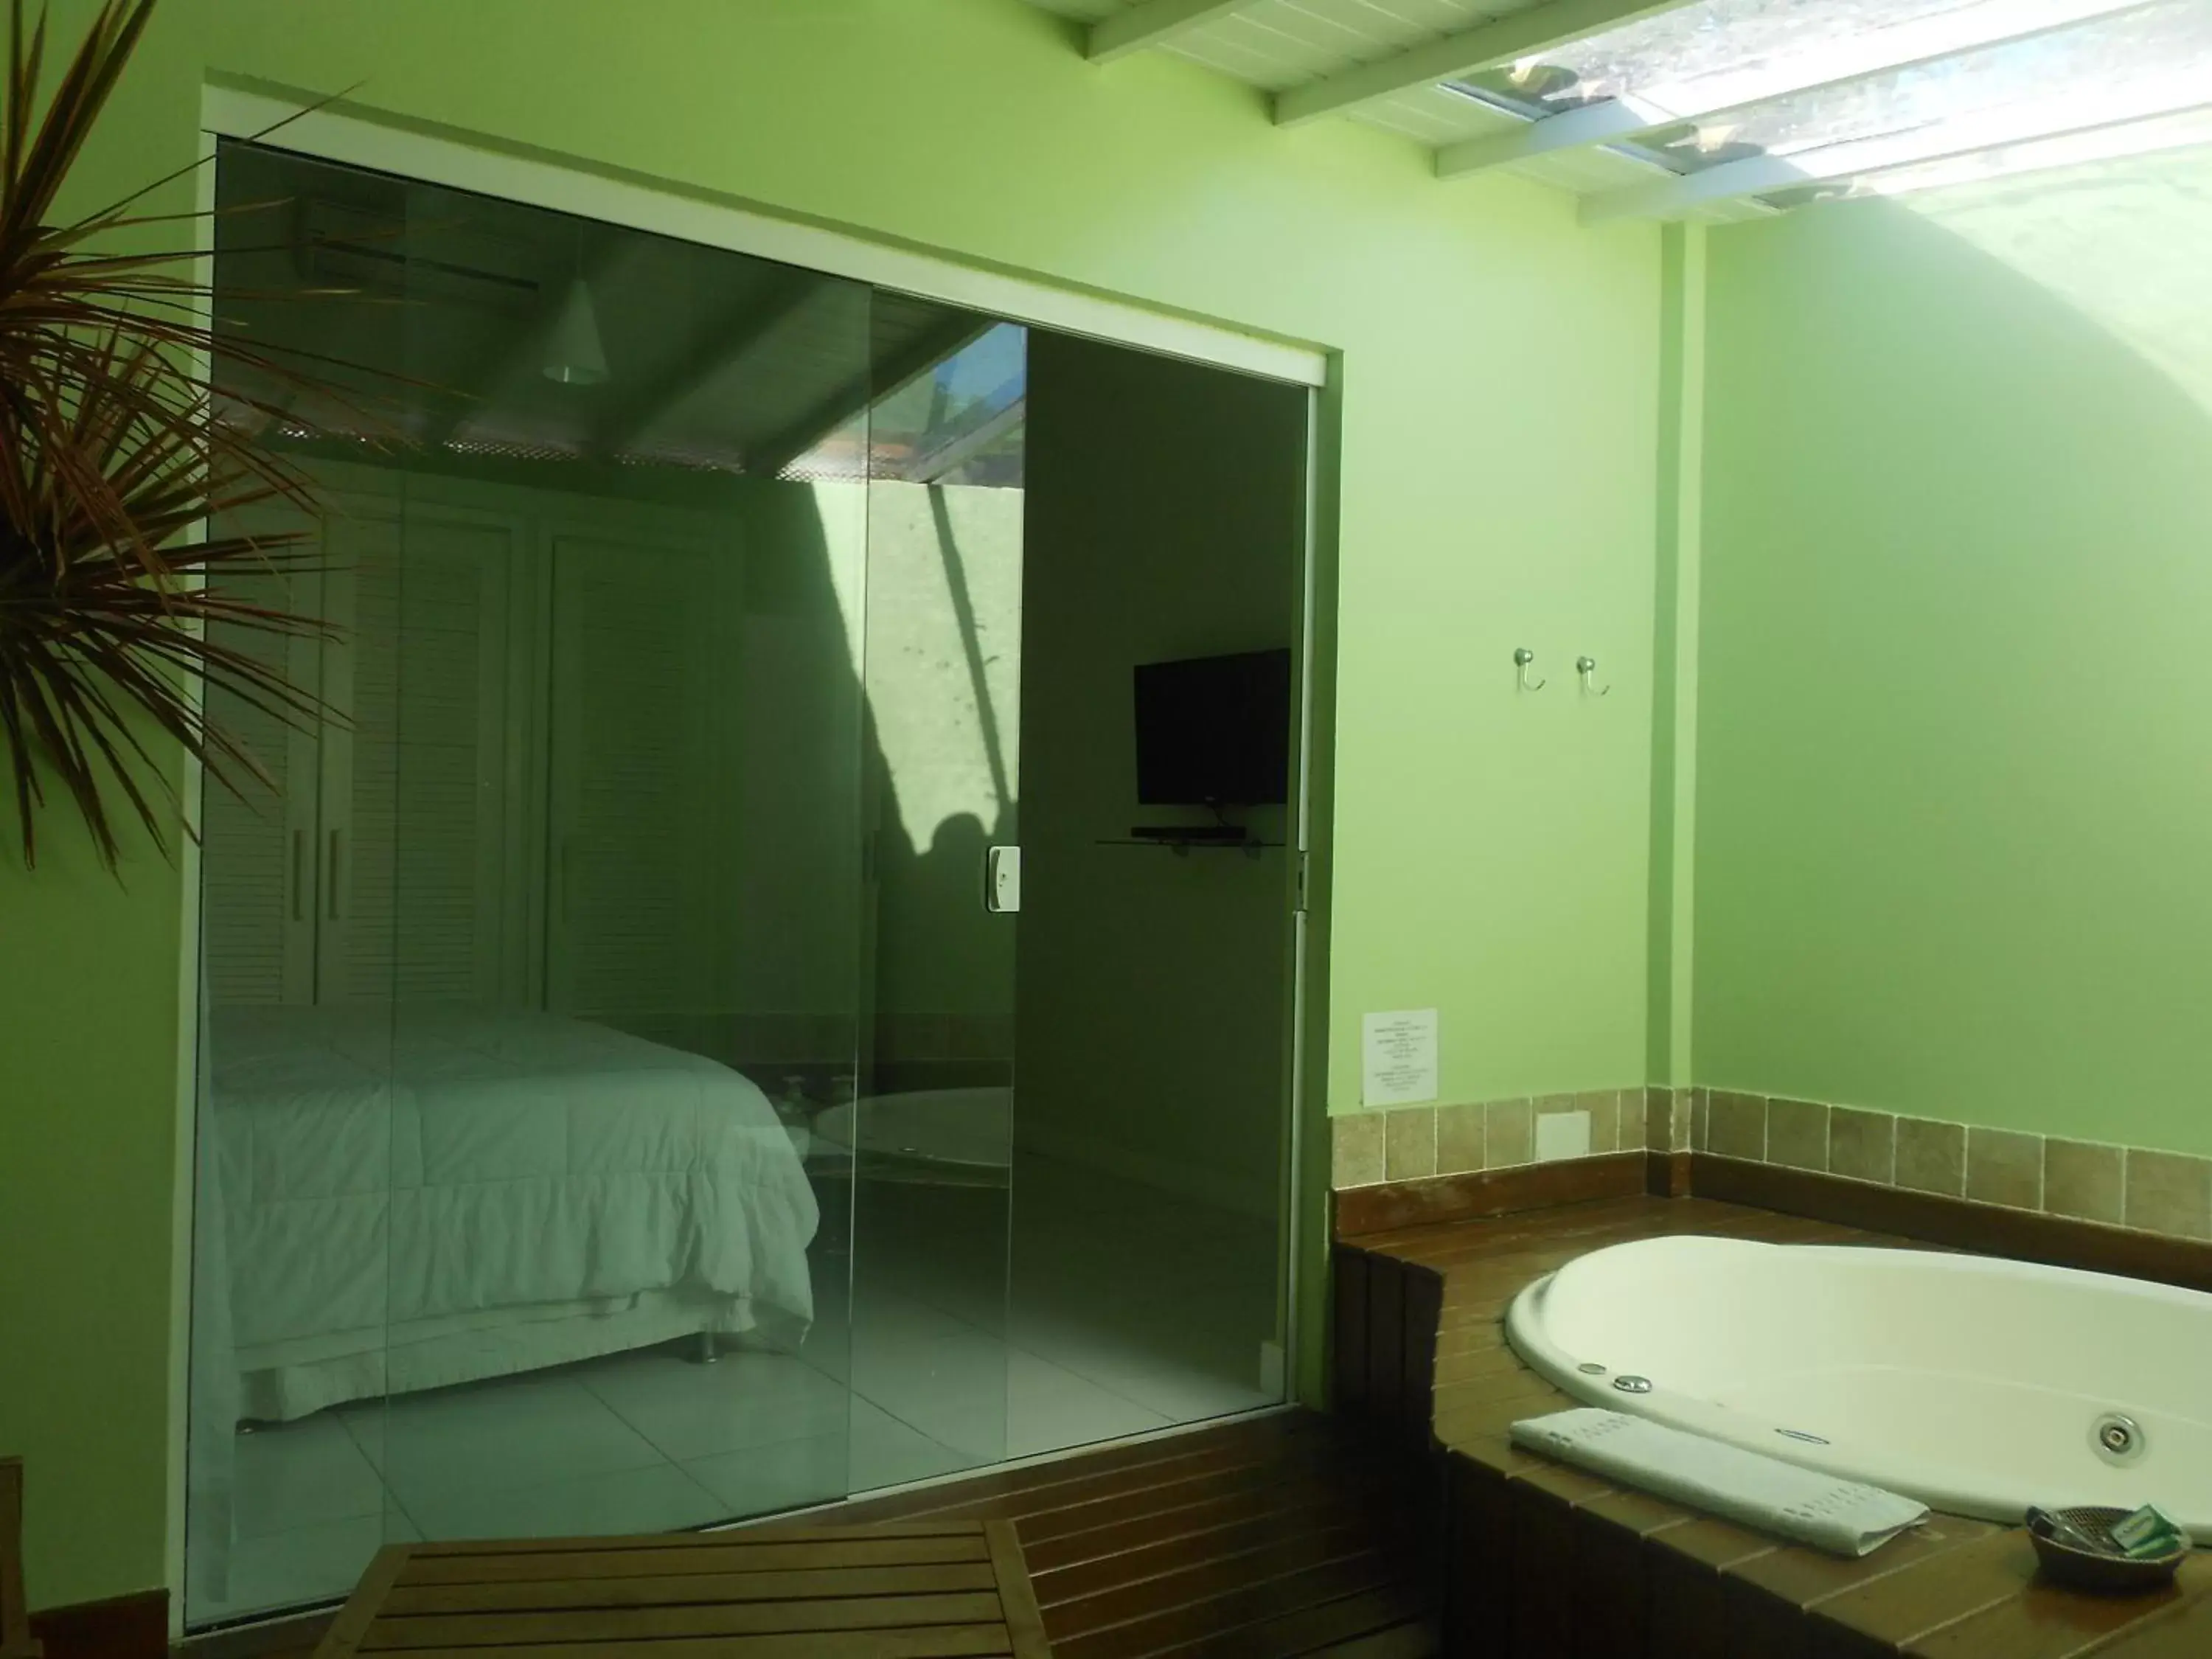 Bedroom in Pousada dos Reis